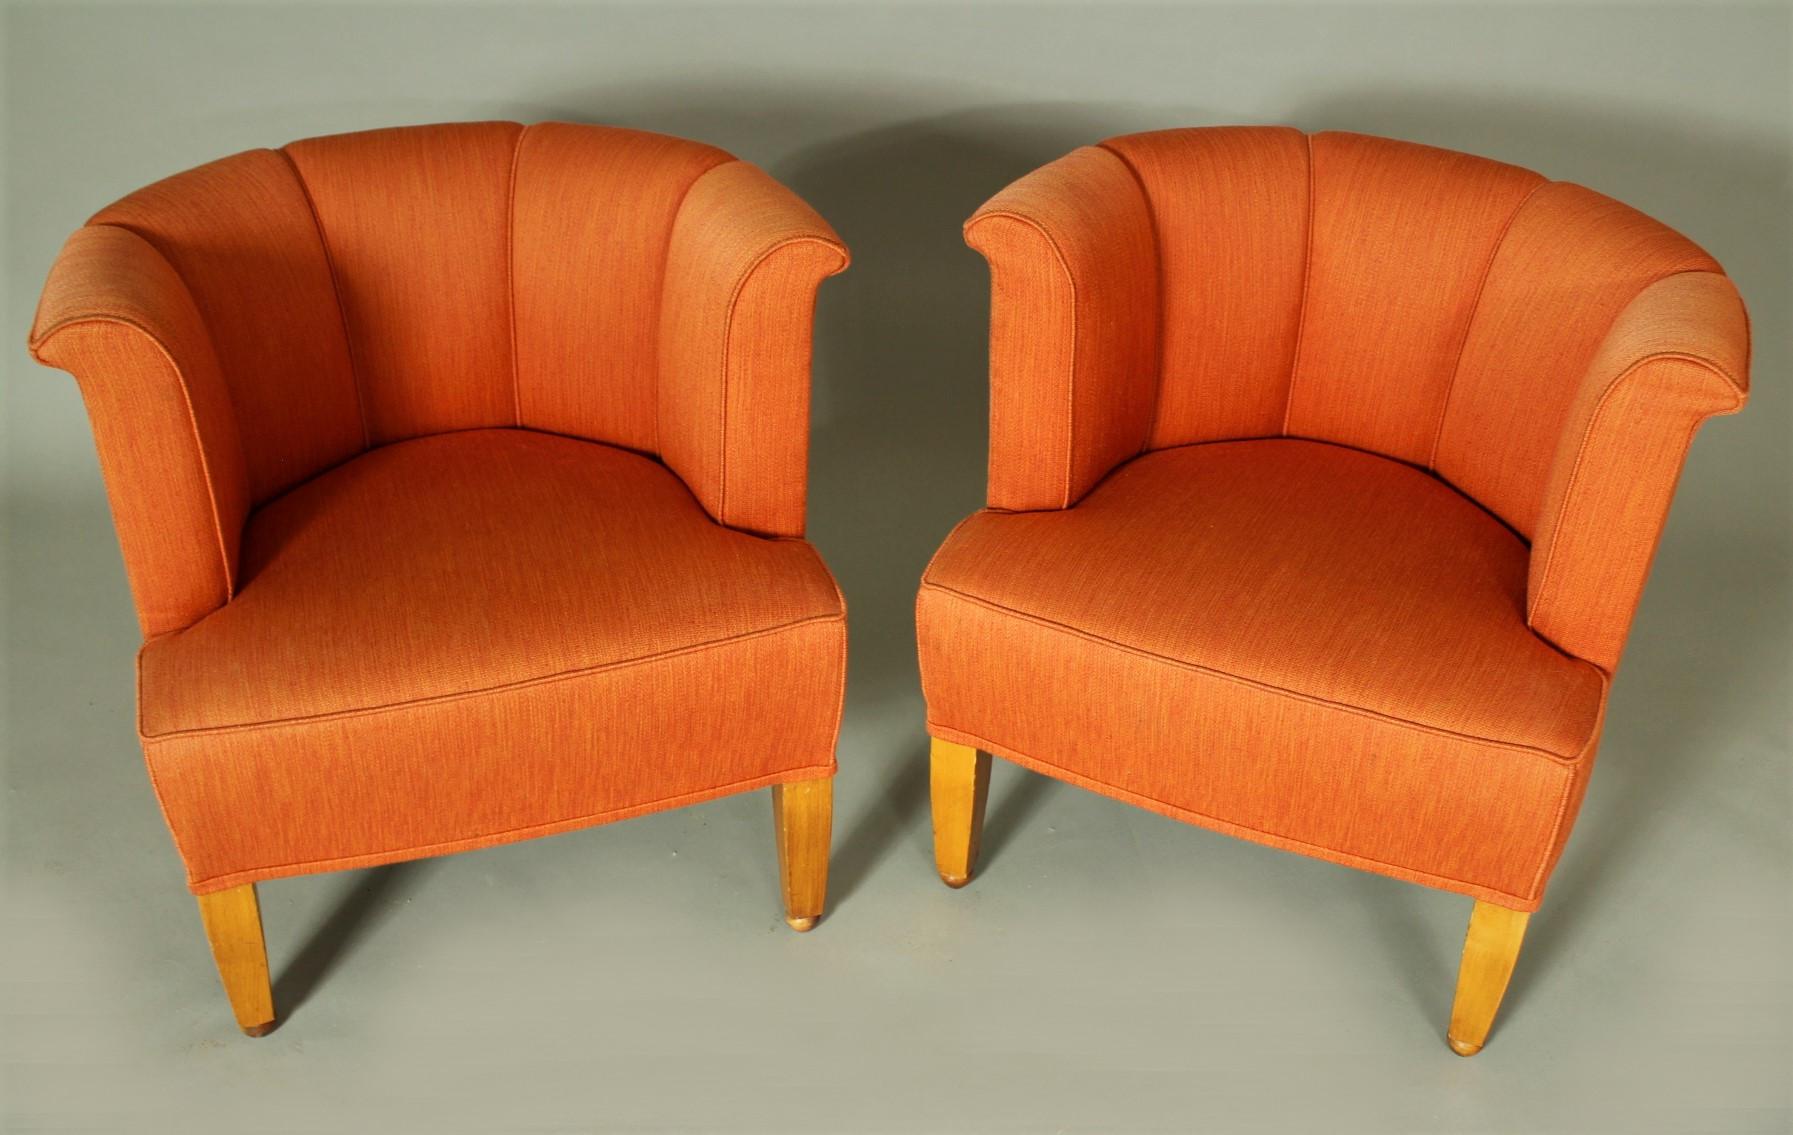 Art Nouveau Pair of Alleegasse Easy Chairs by Josef Hoffmann, Wittmann, 1990s